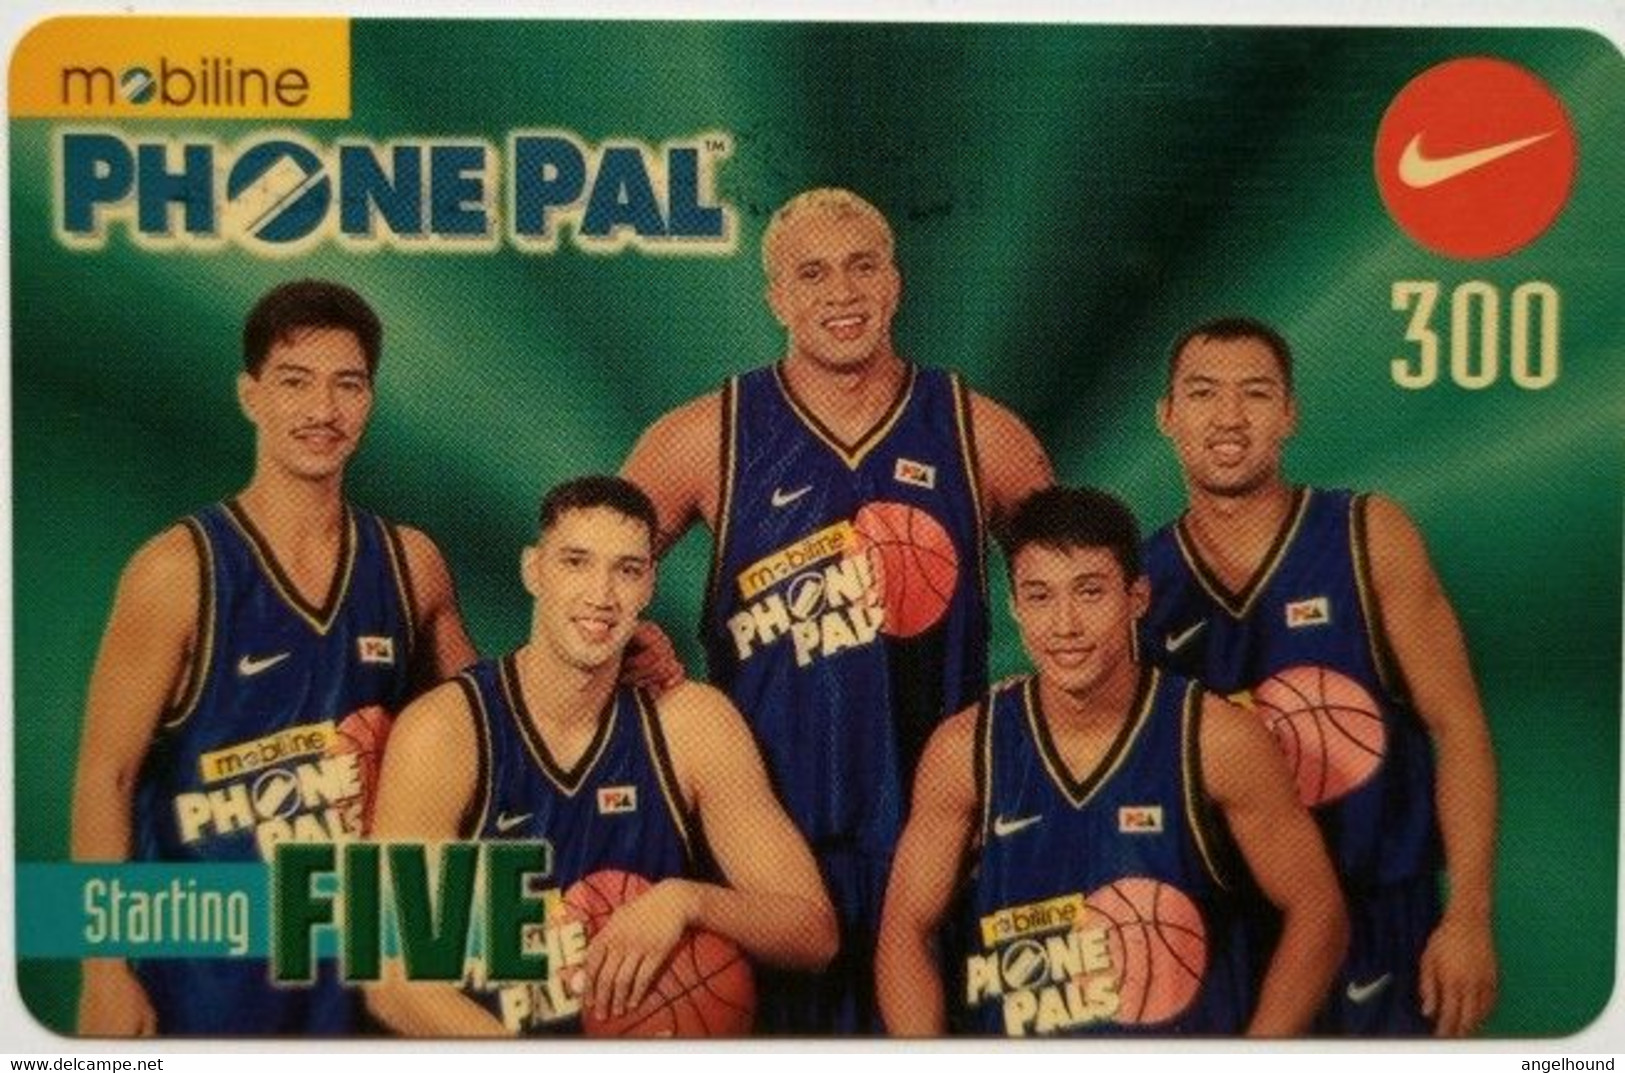 Philippines Mobiline Phonepal 300 Peso " Basketball " - Filipinas